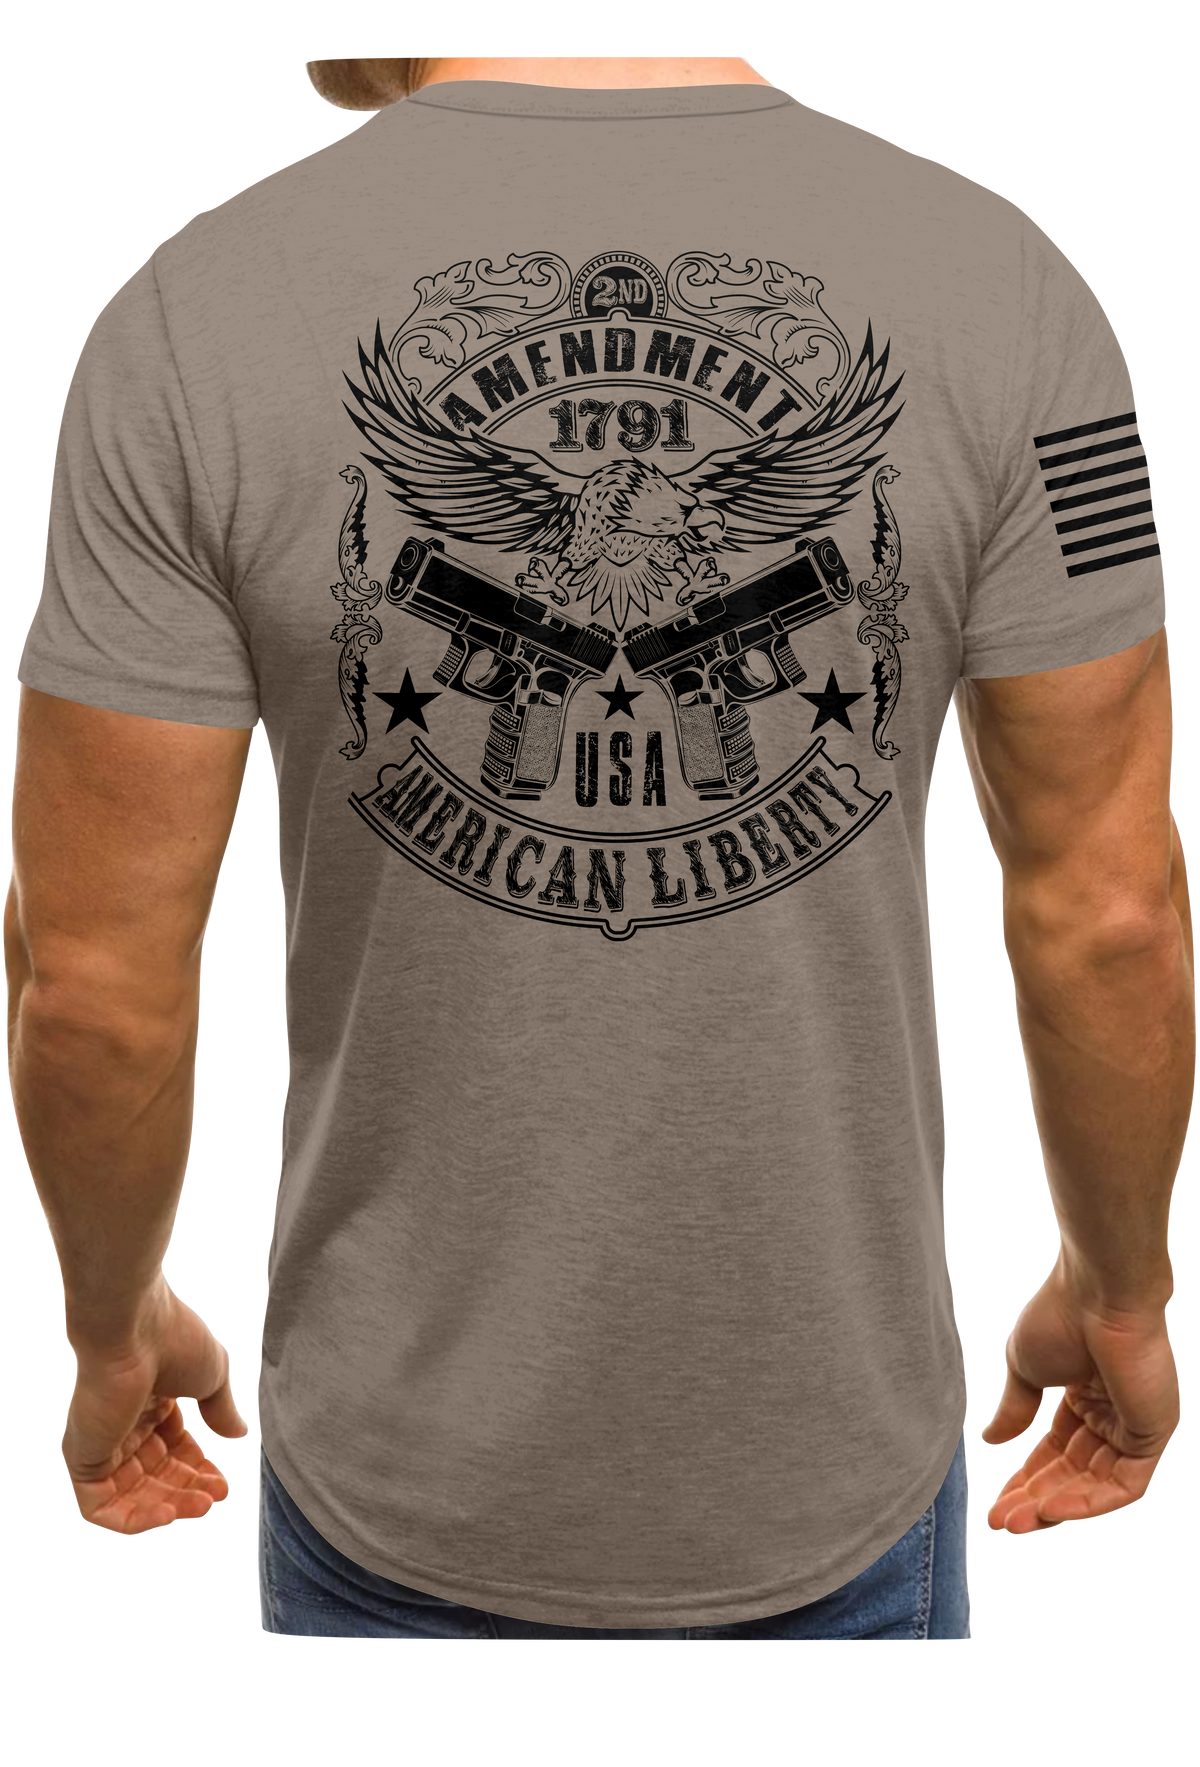 Essential Liberty Premium T-Shirt - Pennsylvania Firearms Association